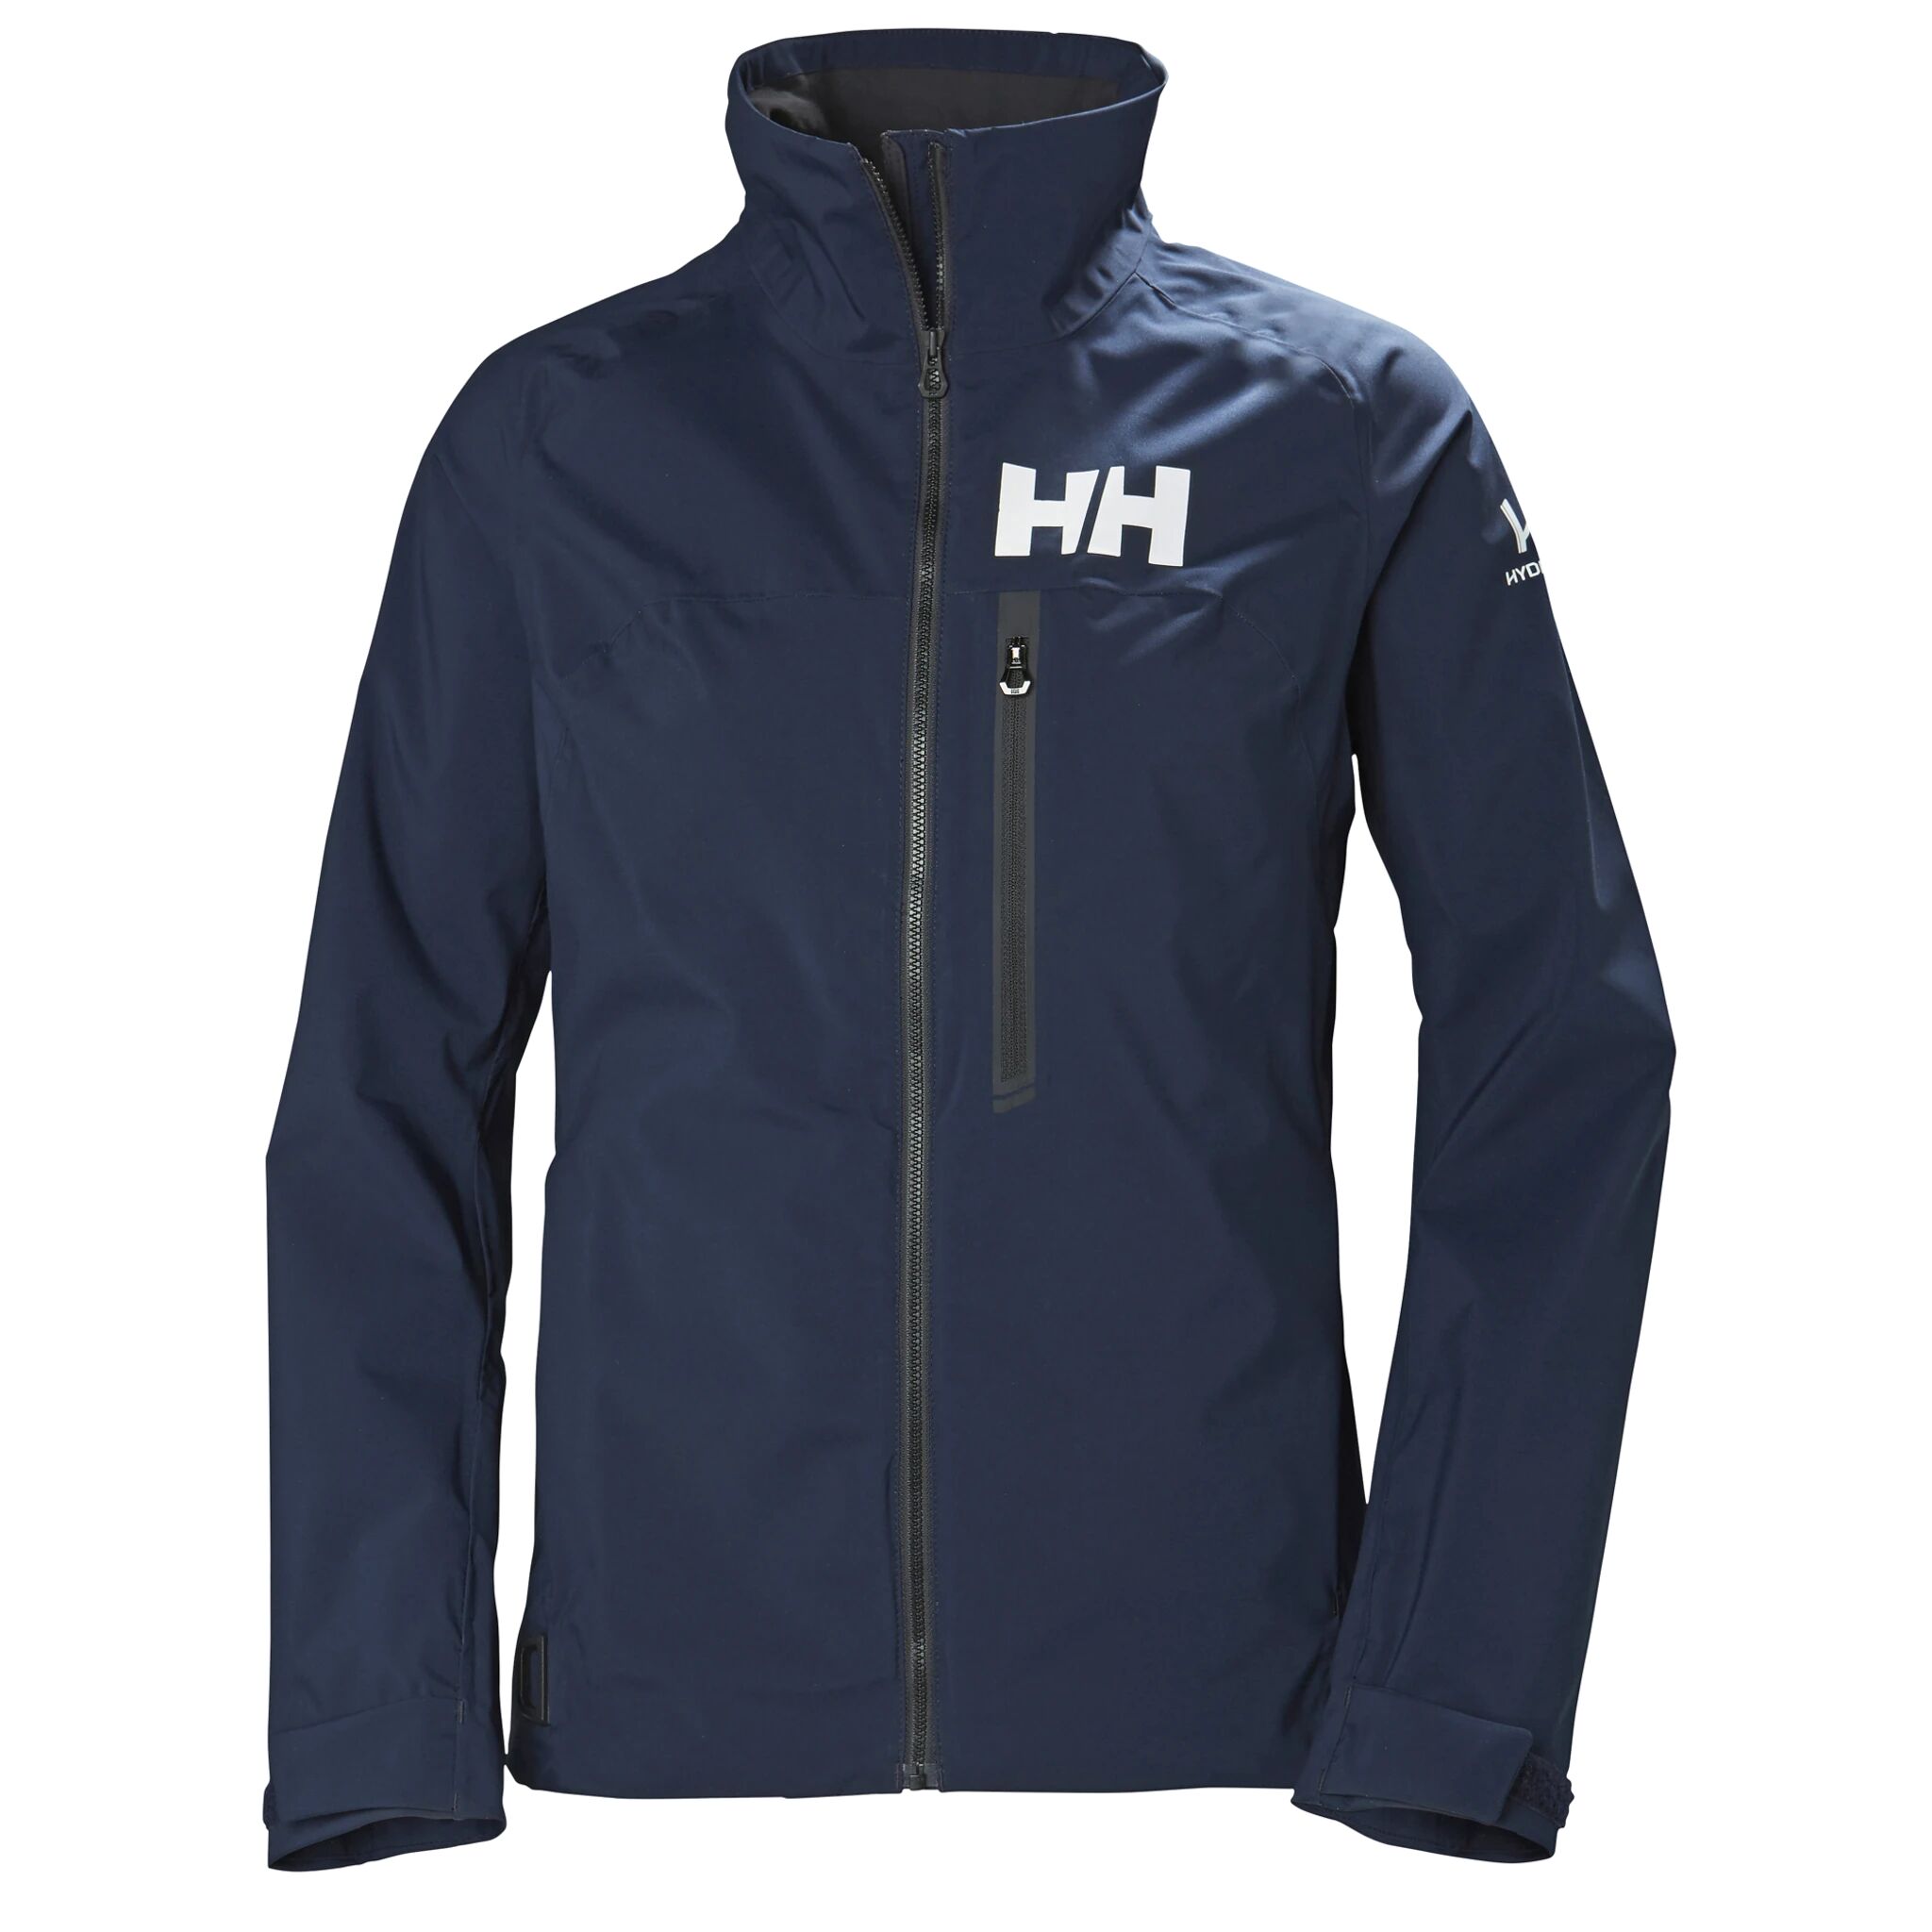 Helly Hansen HP Racing Jacket, seilerjakke dame L 597 NAVY